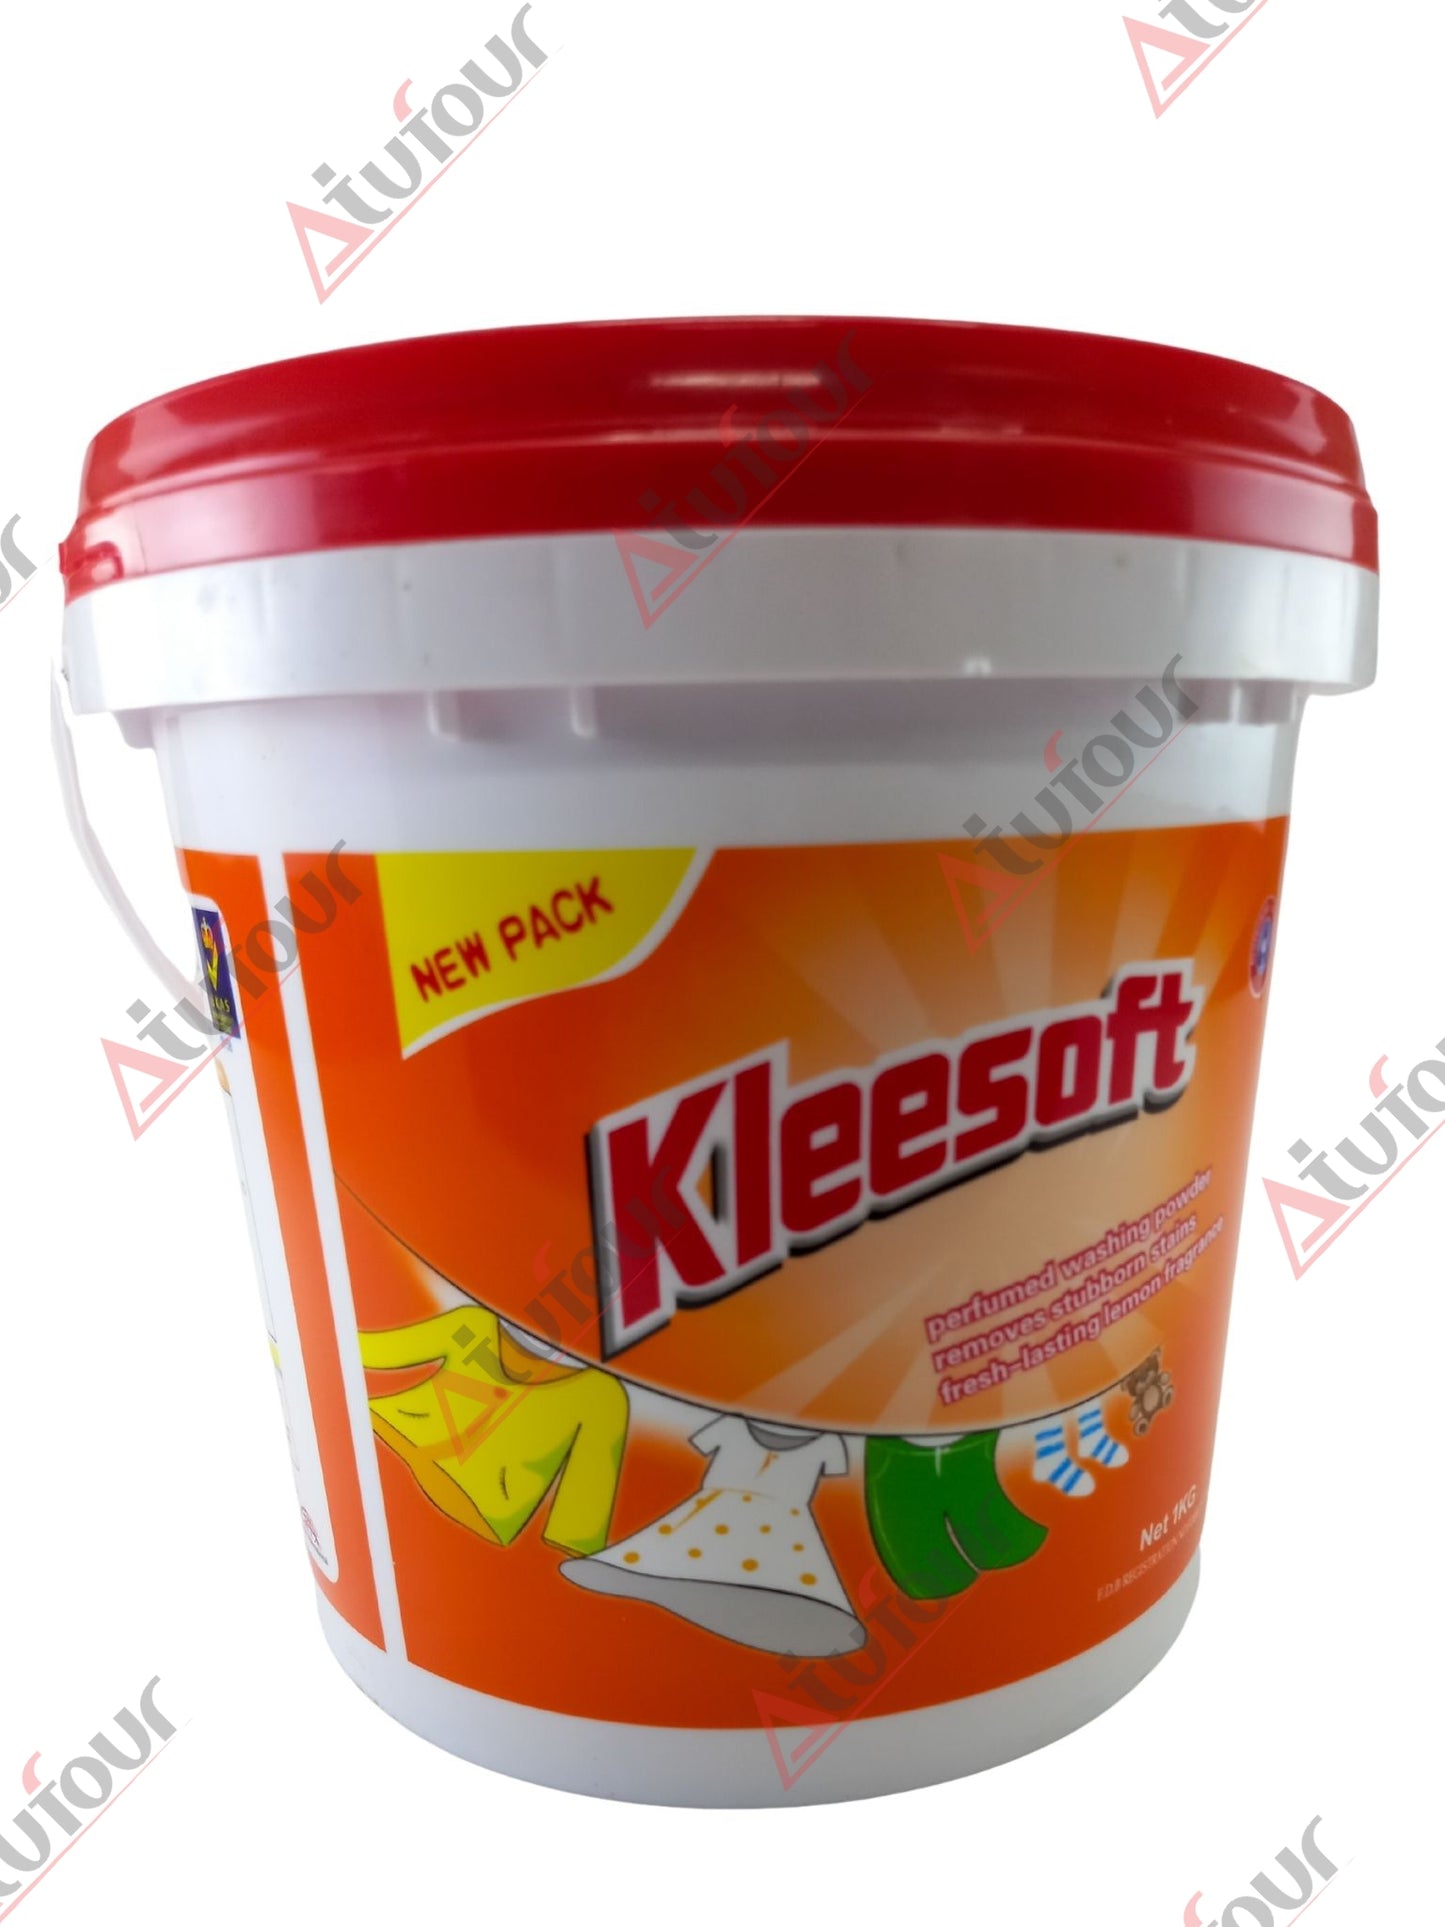 Kleesoft Bucket Washing Powder 1kg